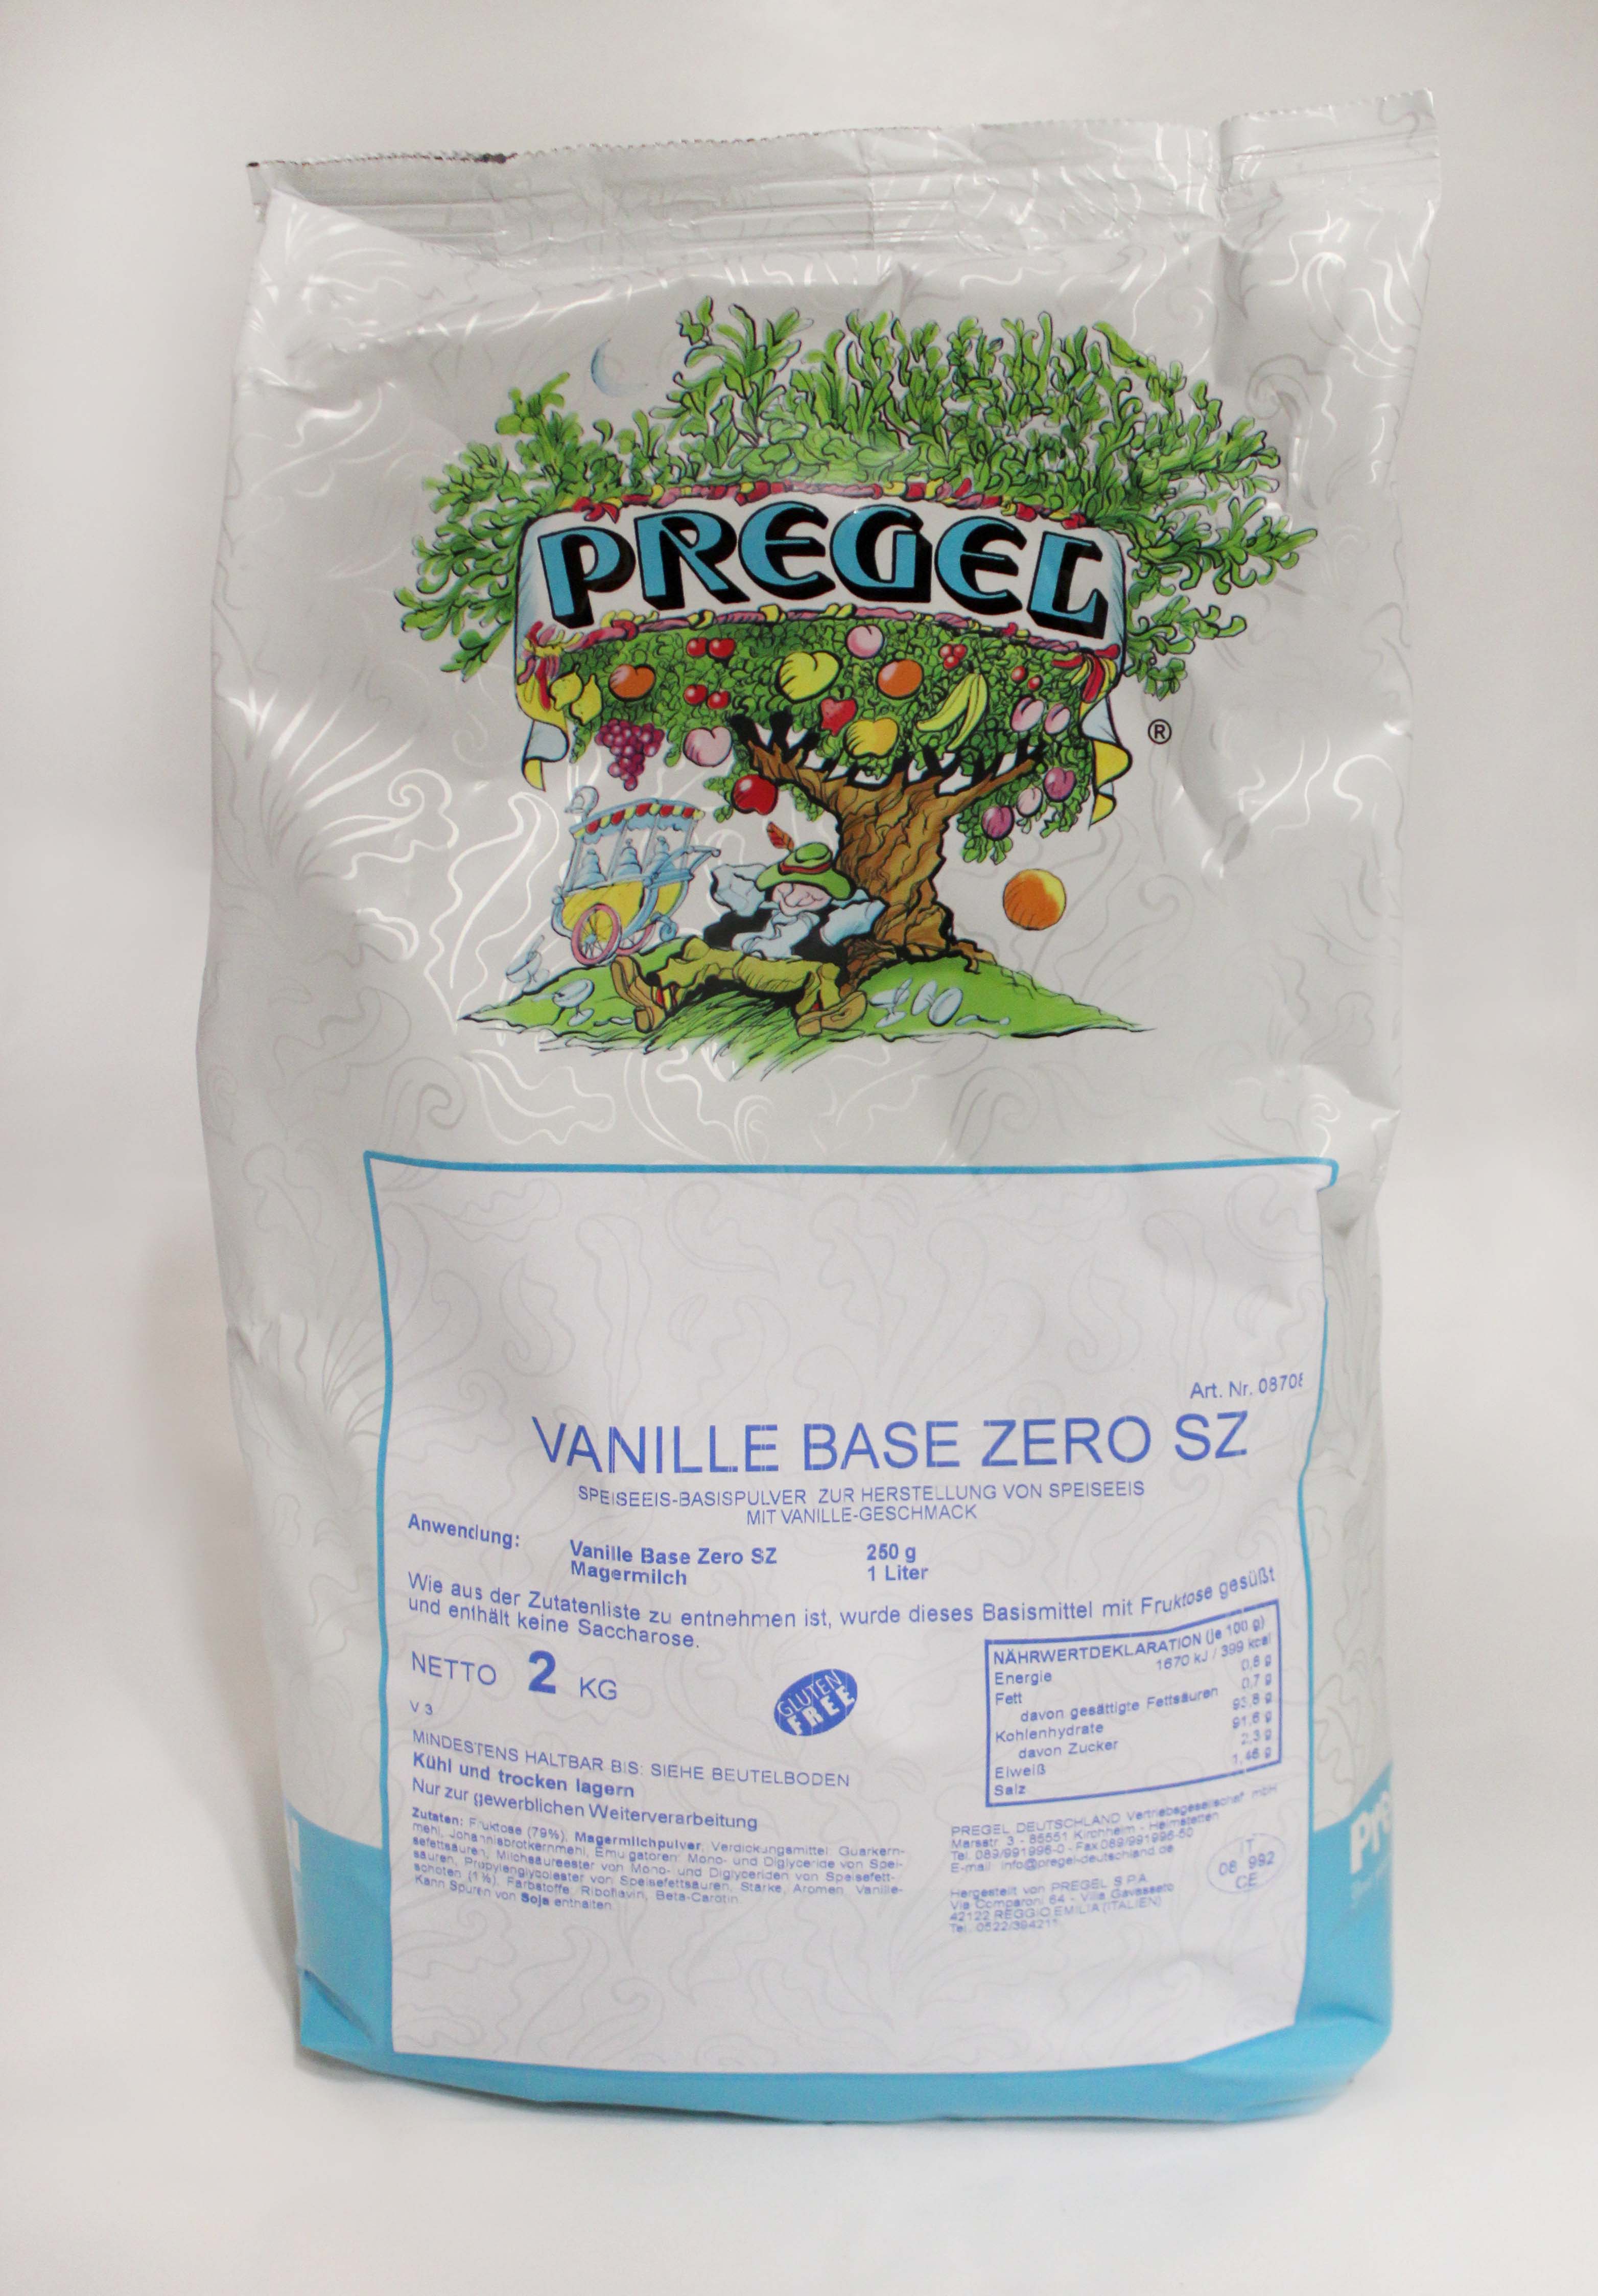 Pregel Vanille Base Zero 2kg Beutel 08708